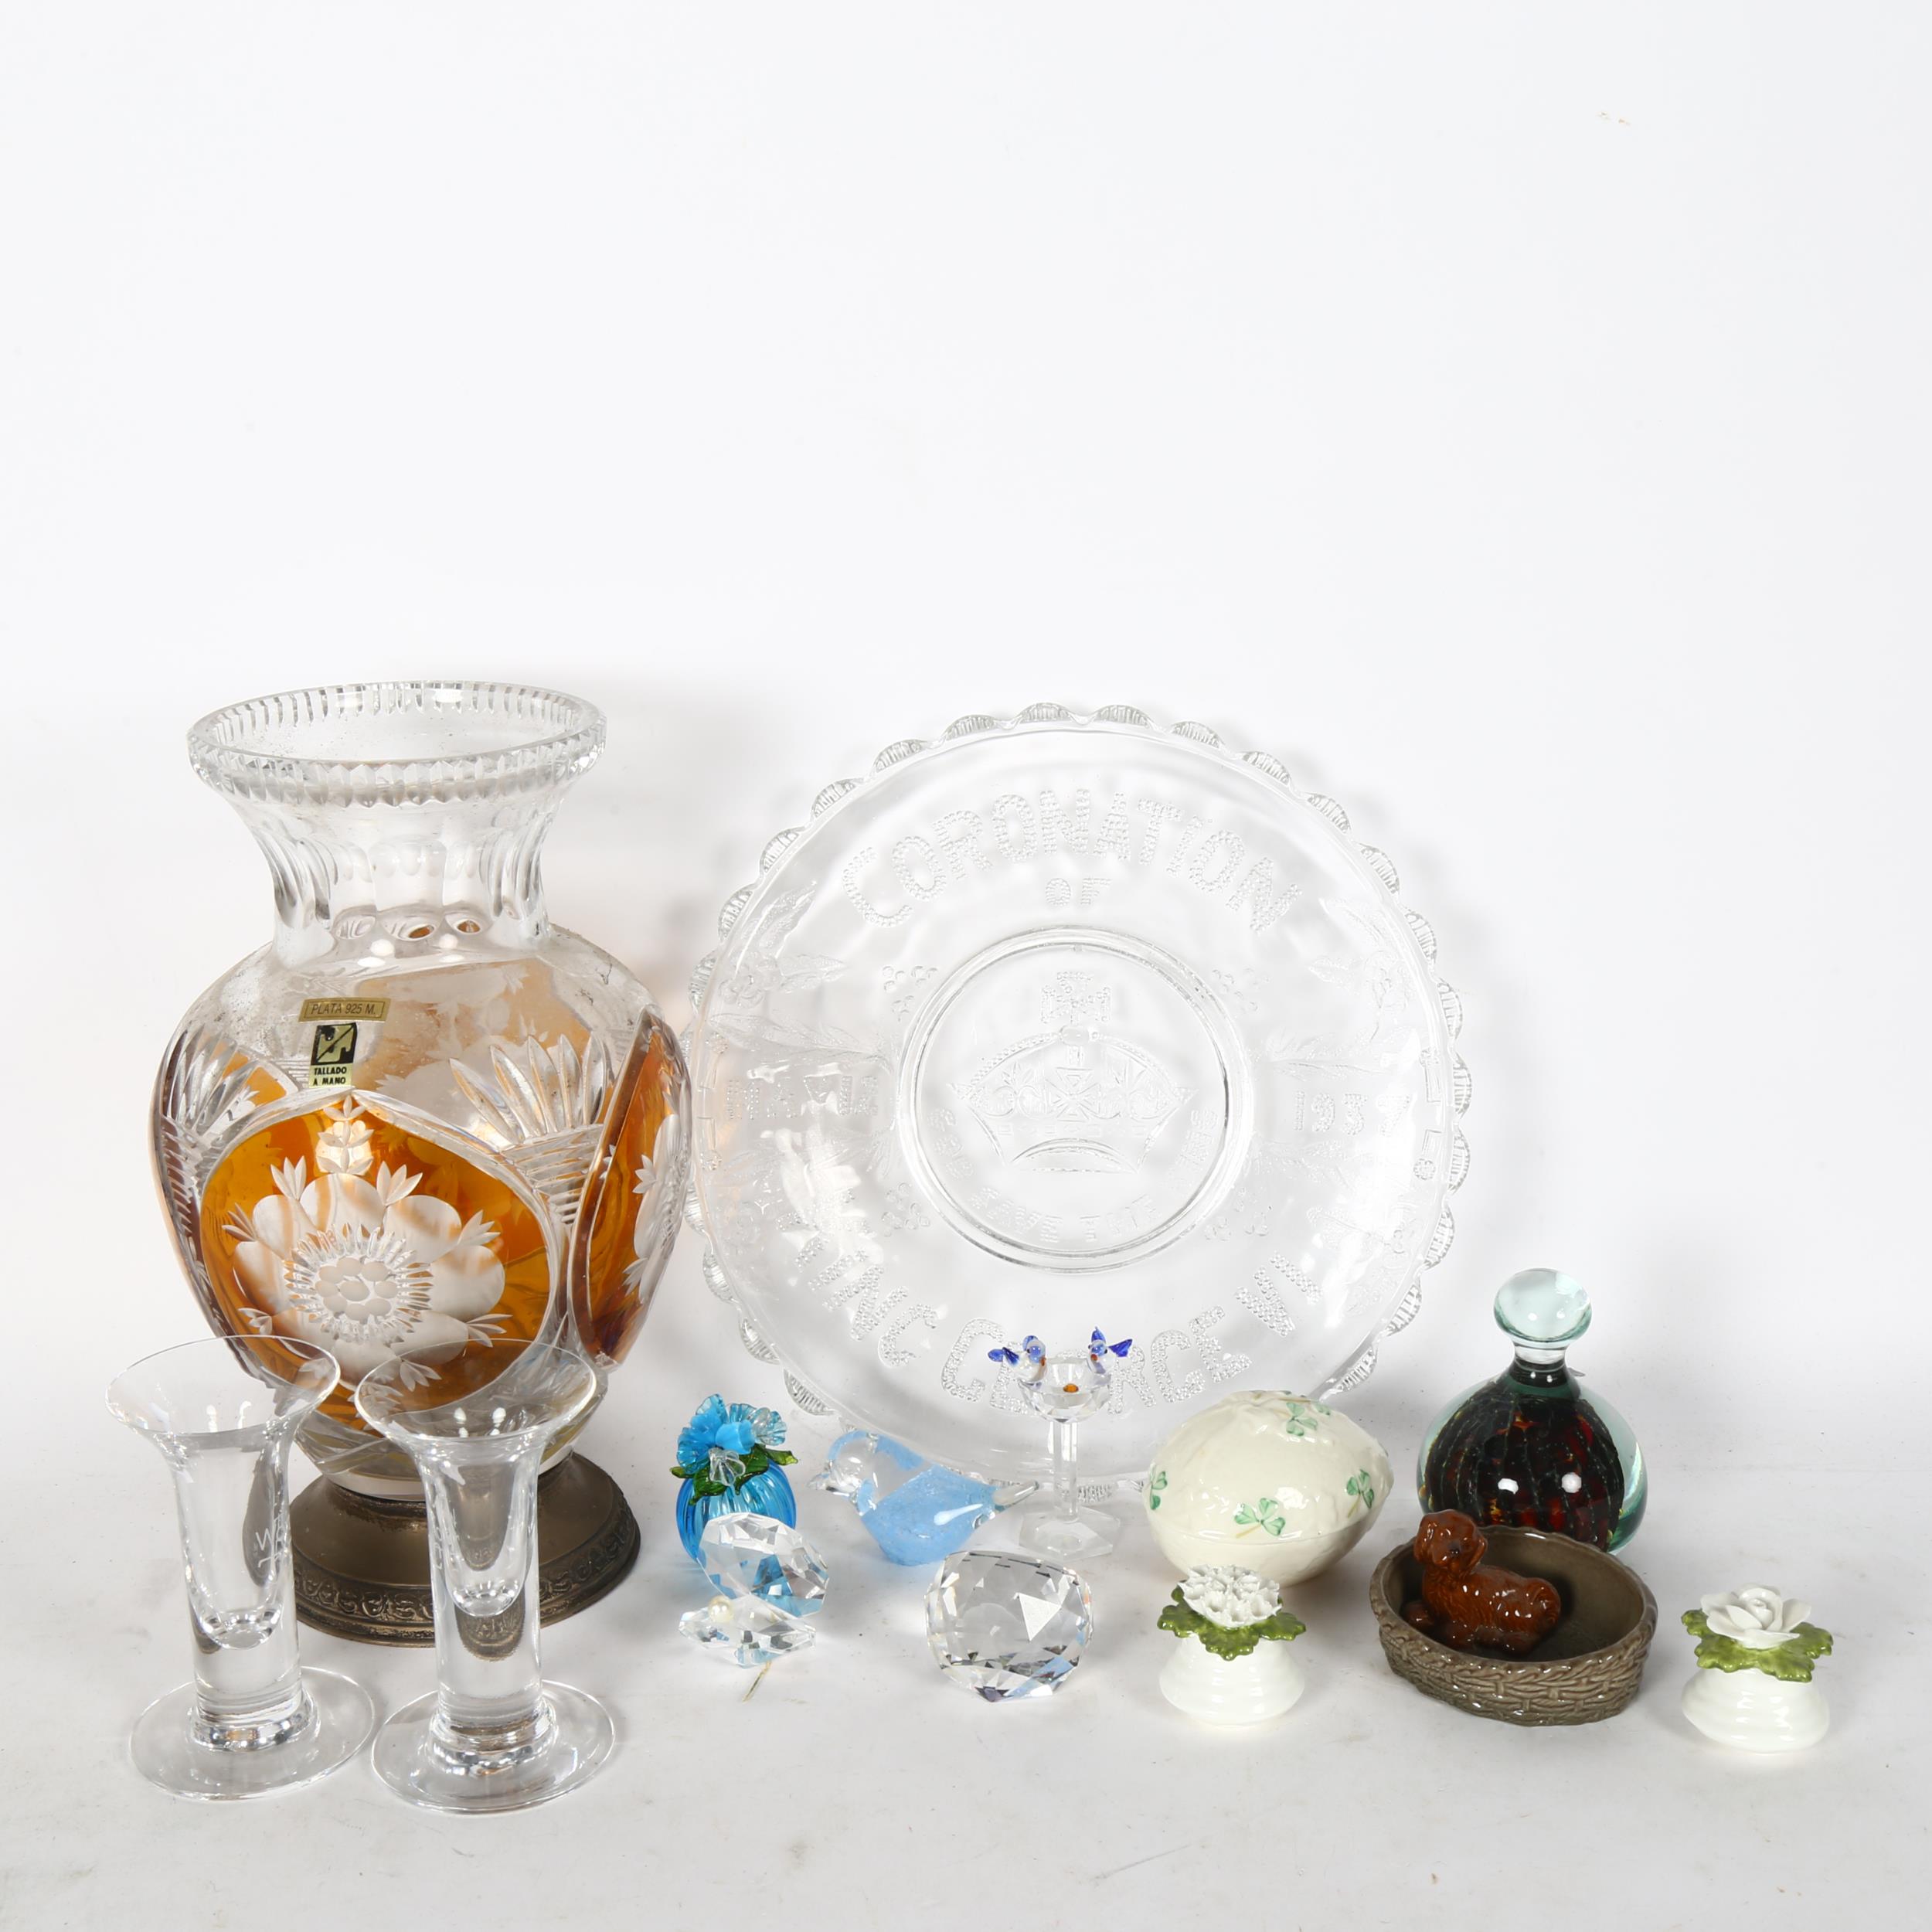 Amber overlay crystal vase on plinth, 26cm, glass paperweights, Belleek egg box, 1937 Coronation